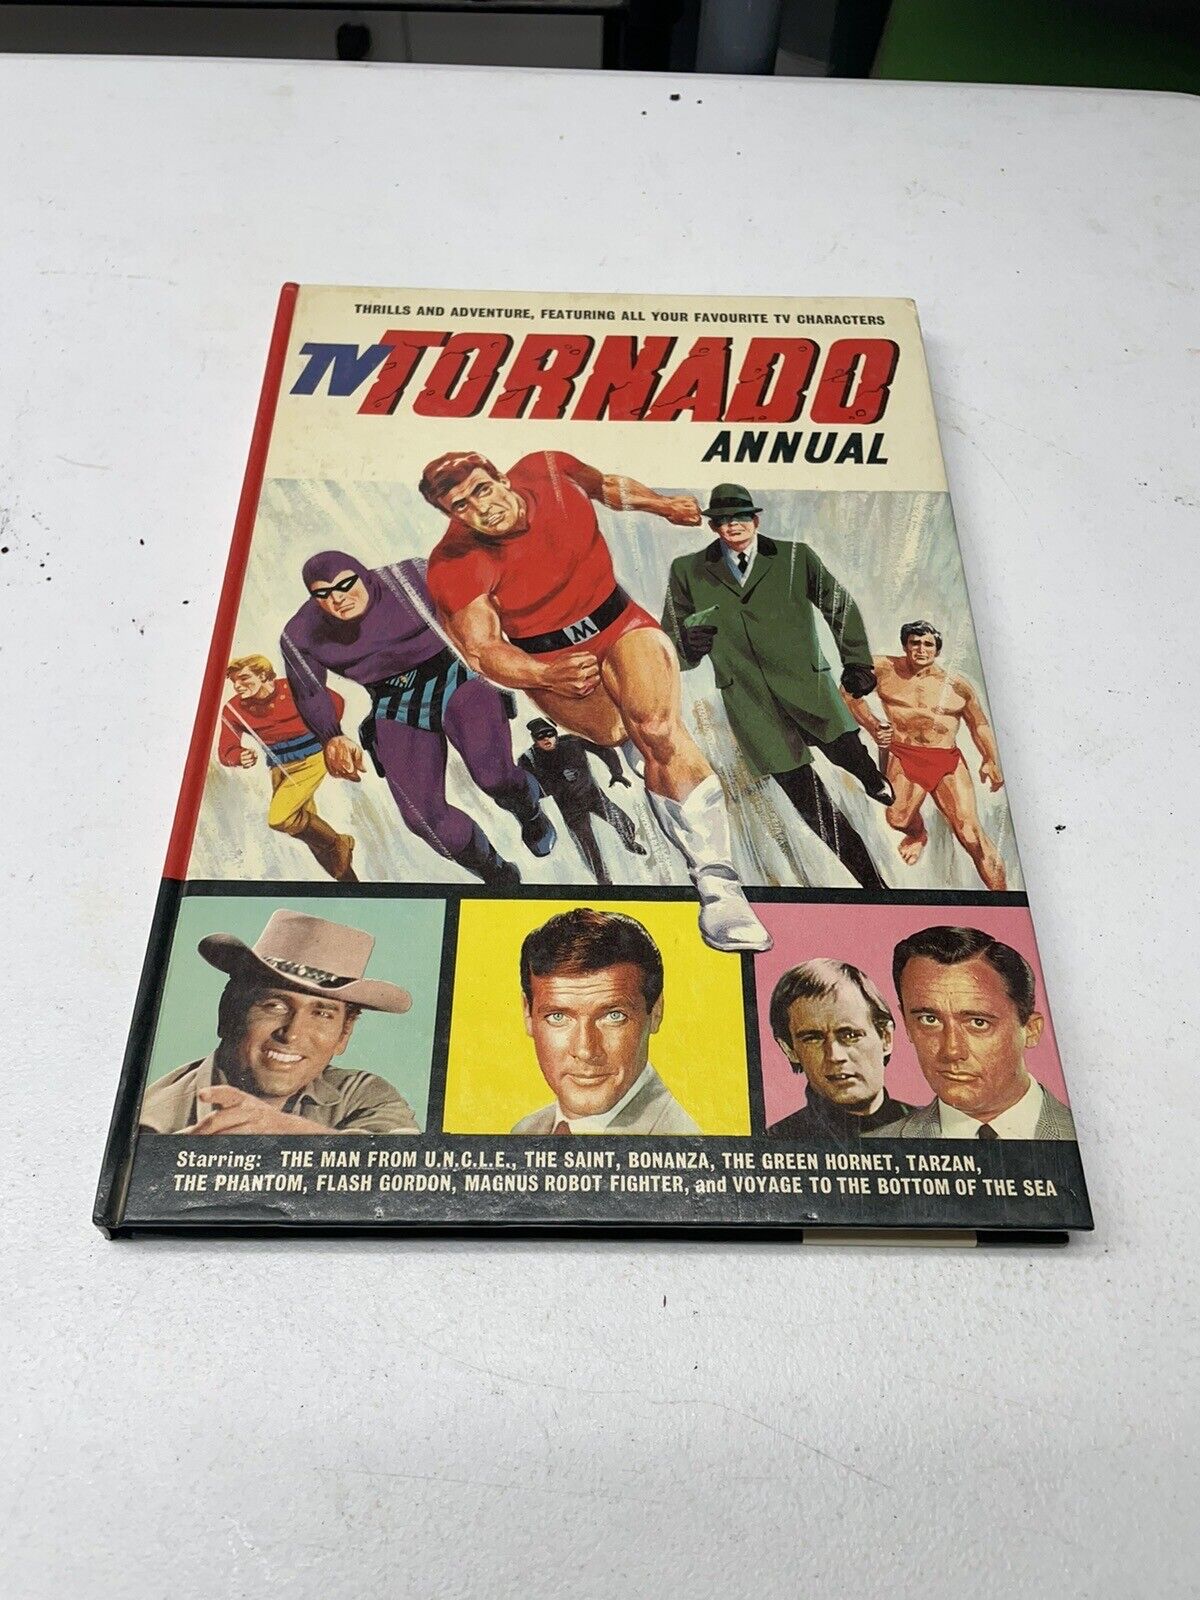 TV Tornado Annual - Hardcover Edition by WD 1968 The Phantom, Tarzan, Bonaza, ++